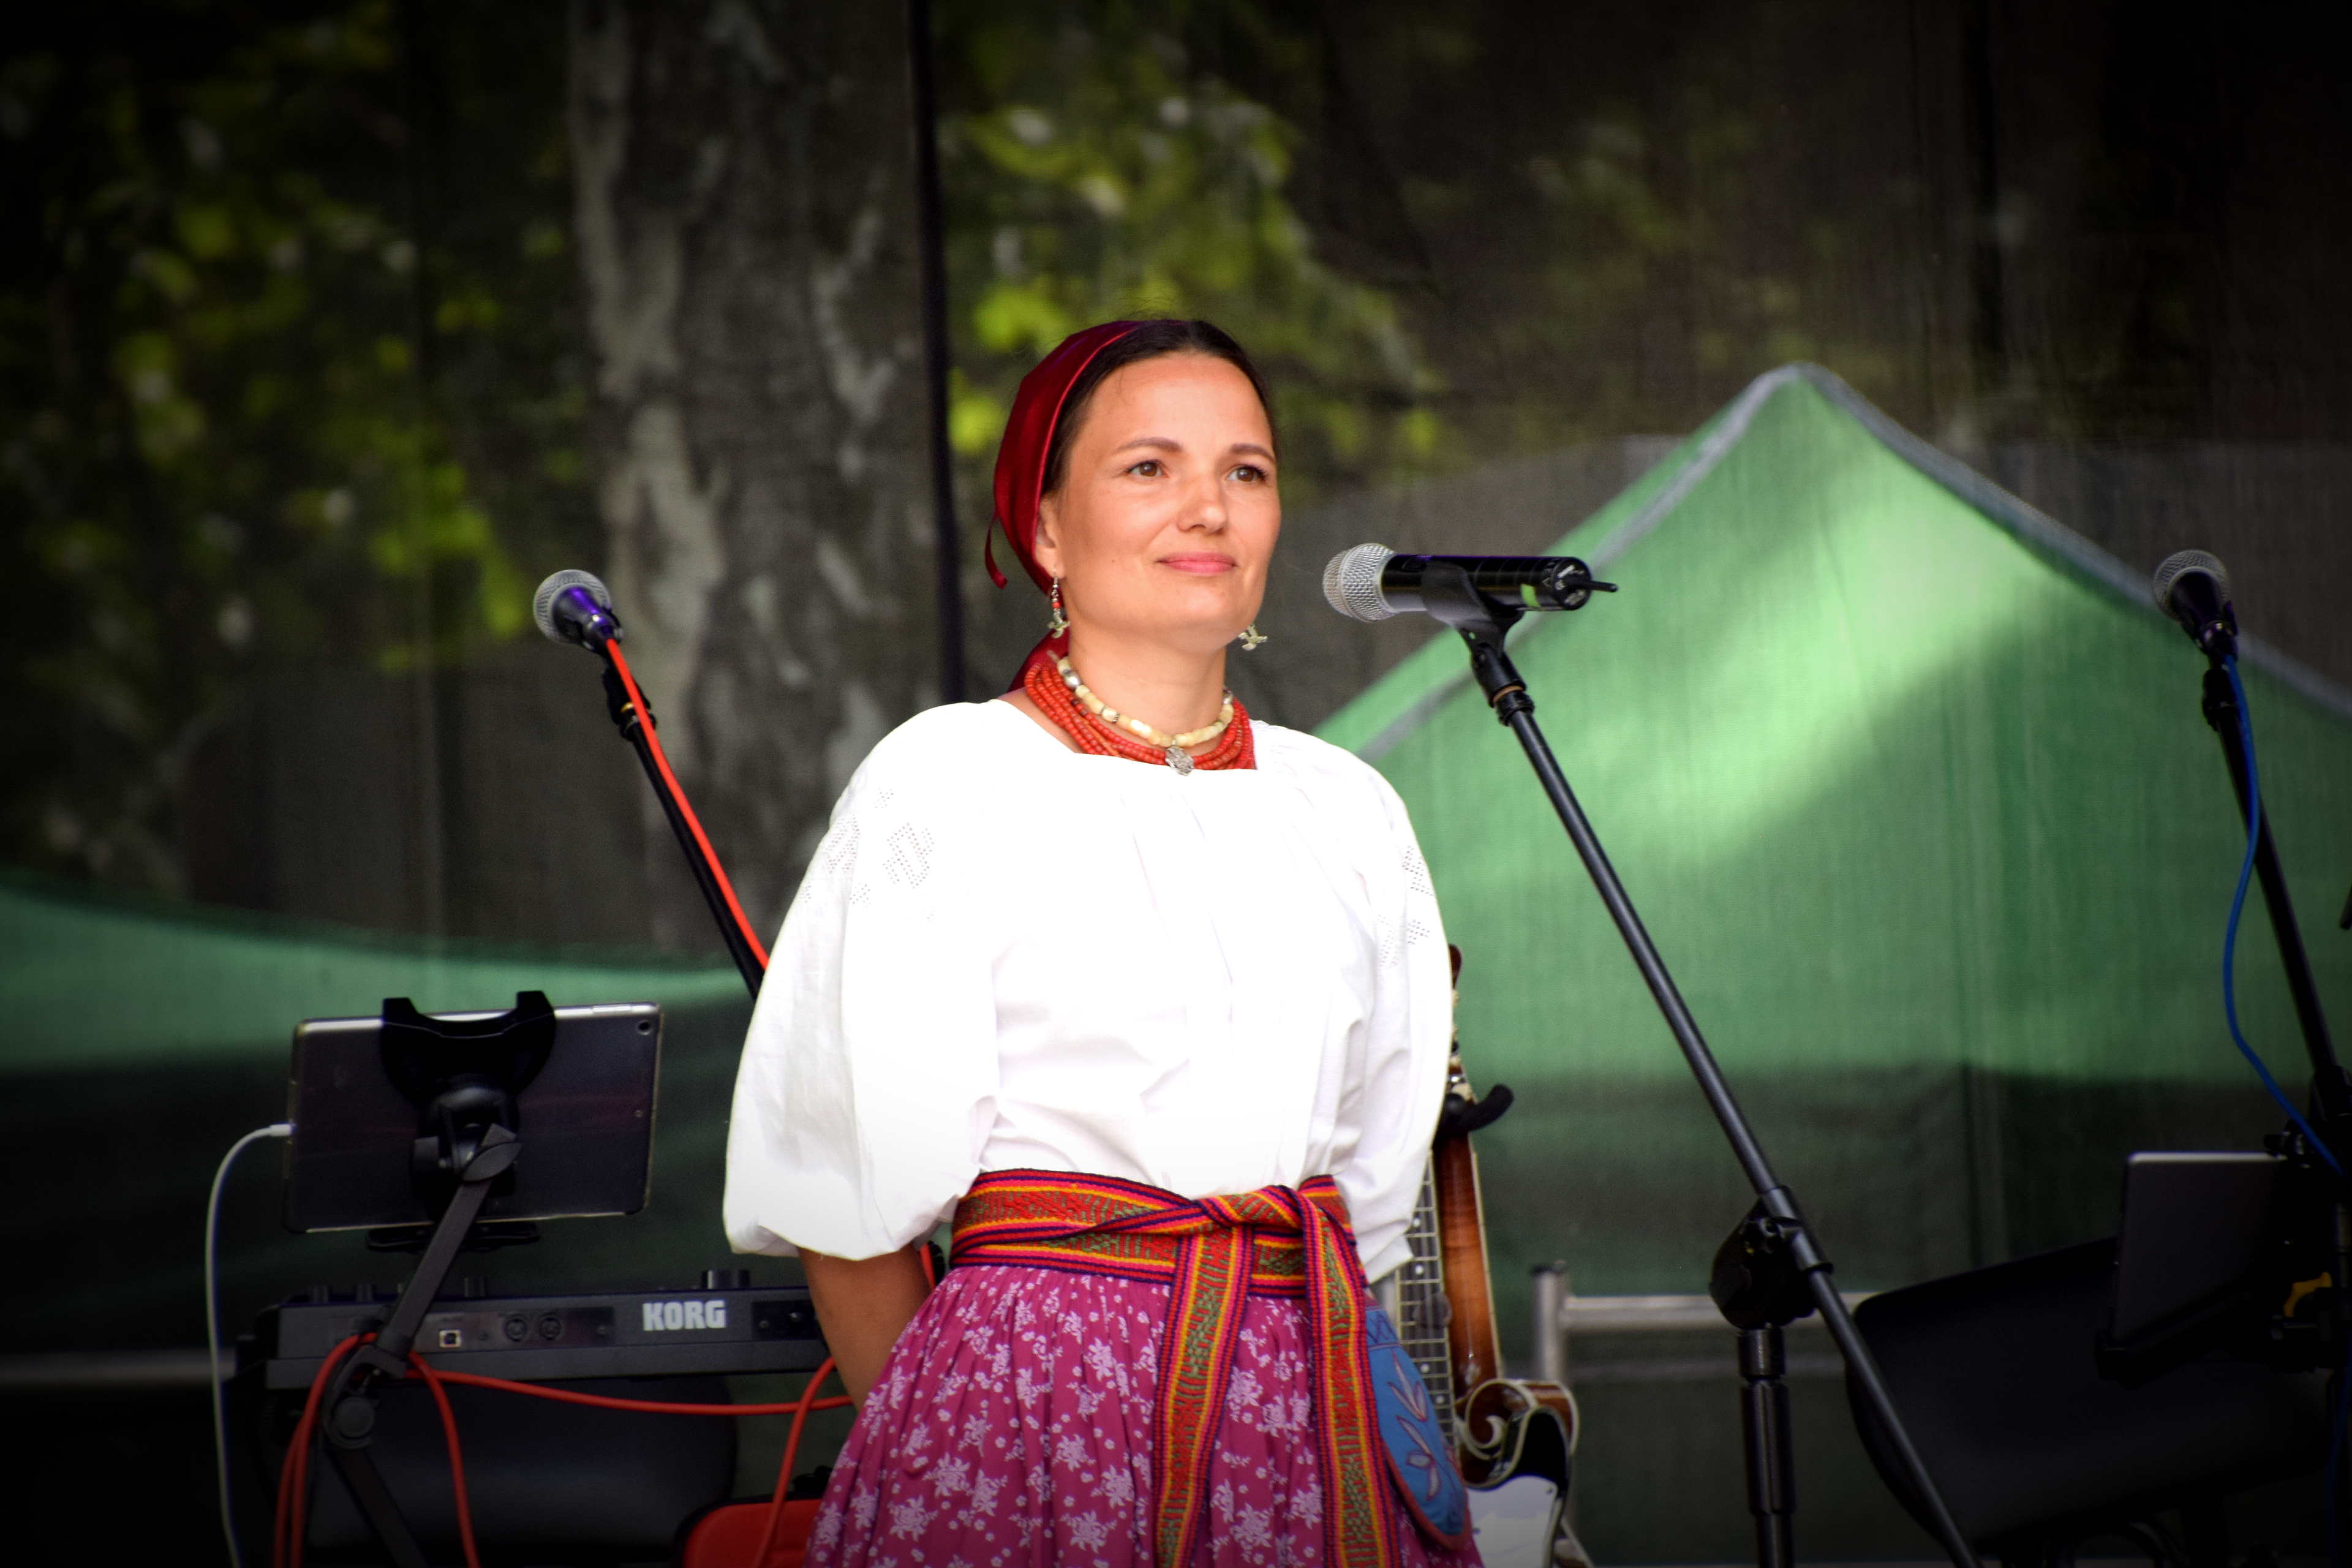 Hanna Sopilka